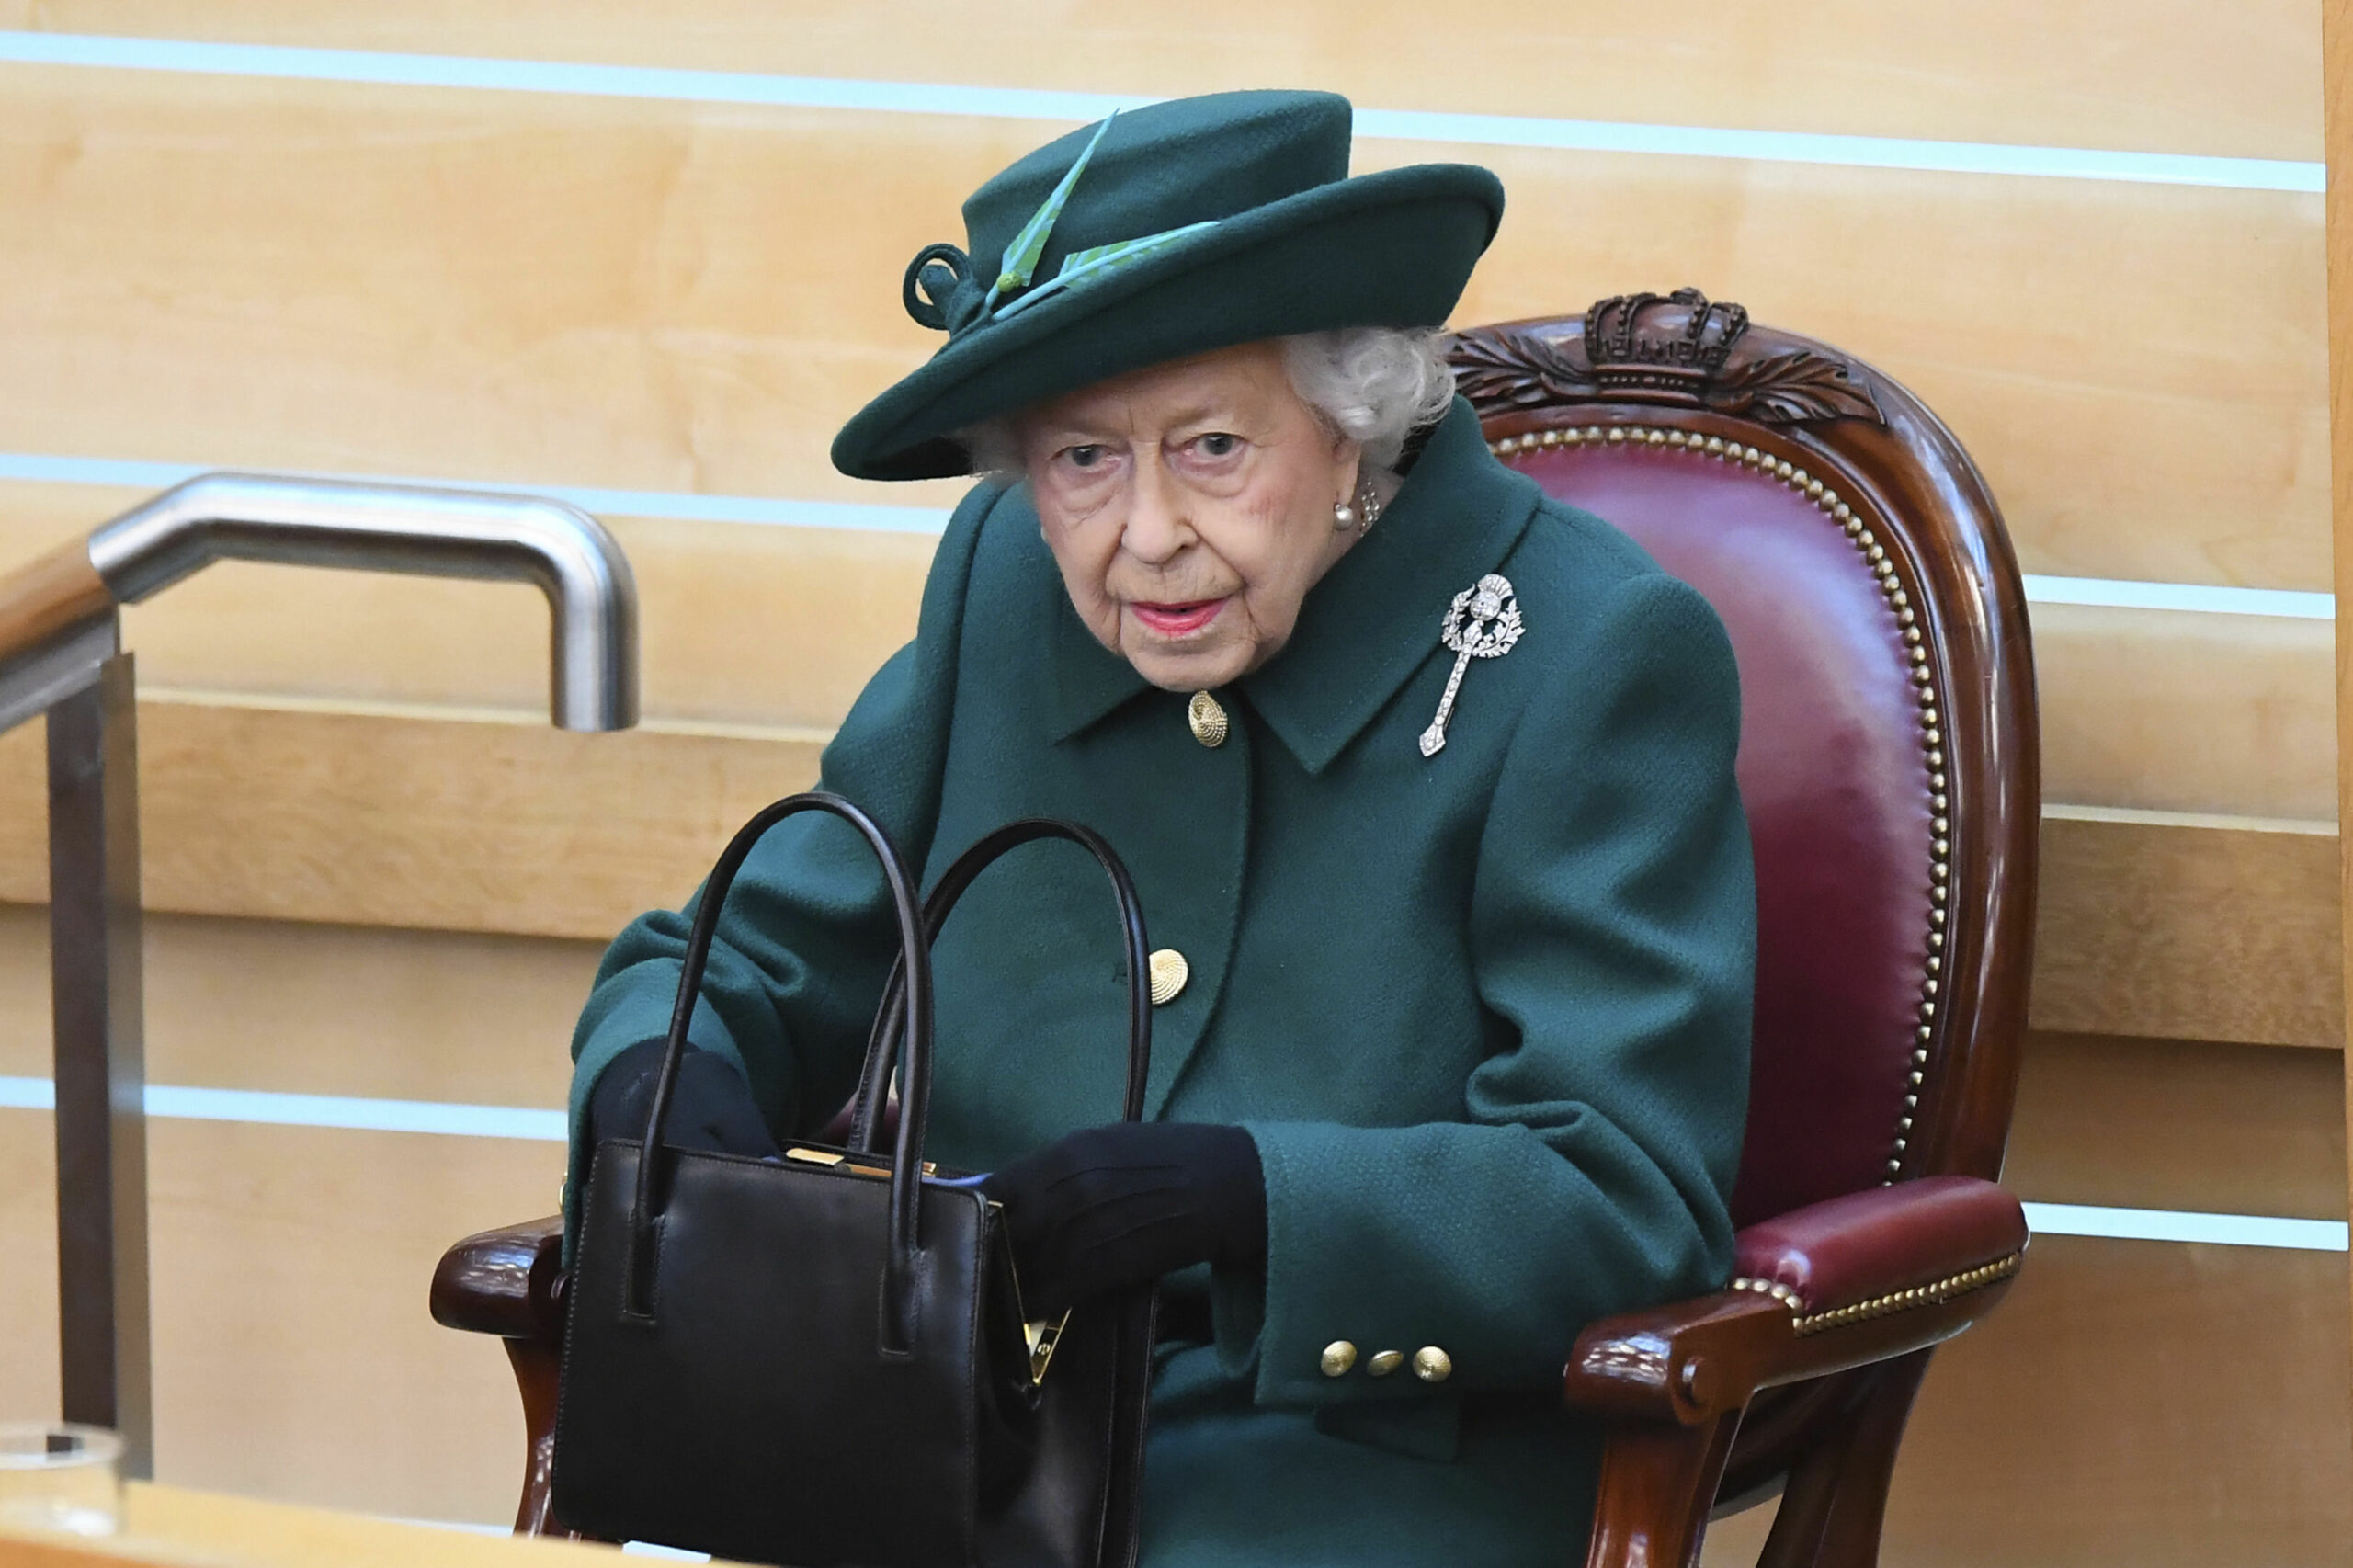 Queen Elizabeth II advised by doctors to take two-week break from official duties - Washington Examiner